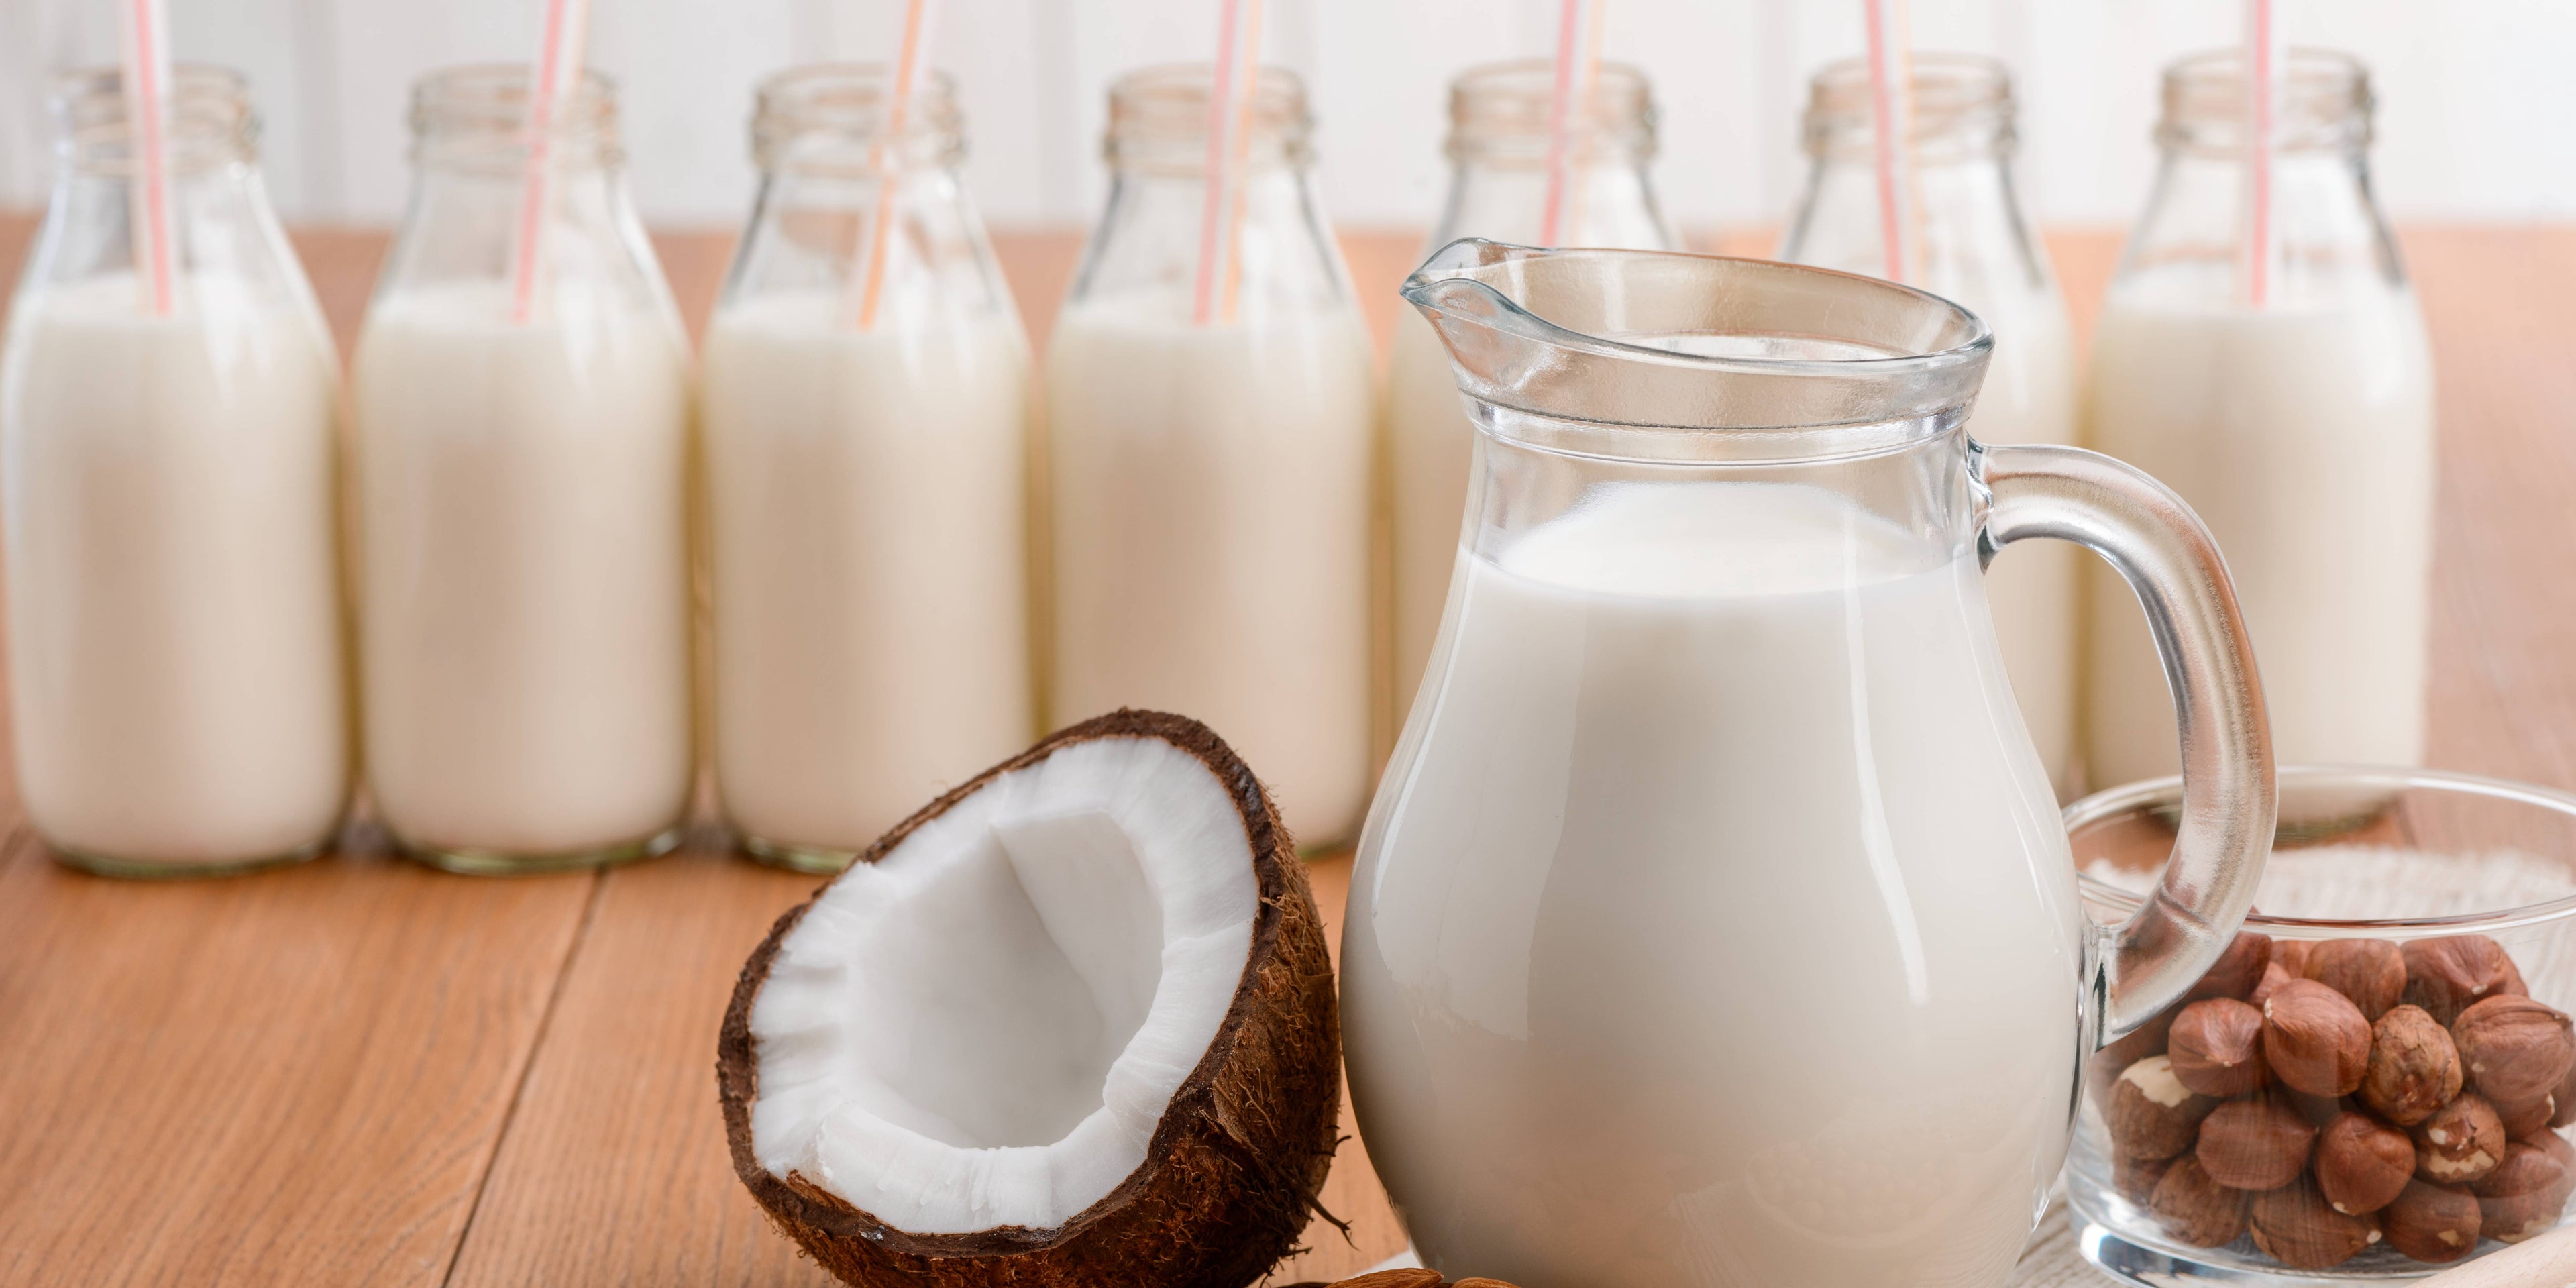 Jug of milk alongside dairy-free milk alternatives, including nuts and coconuts